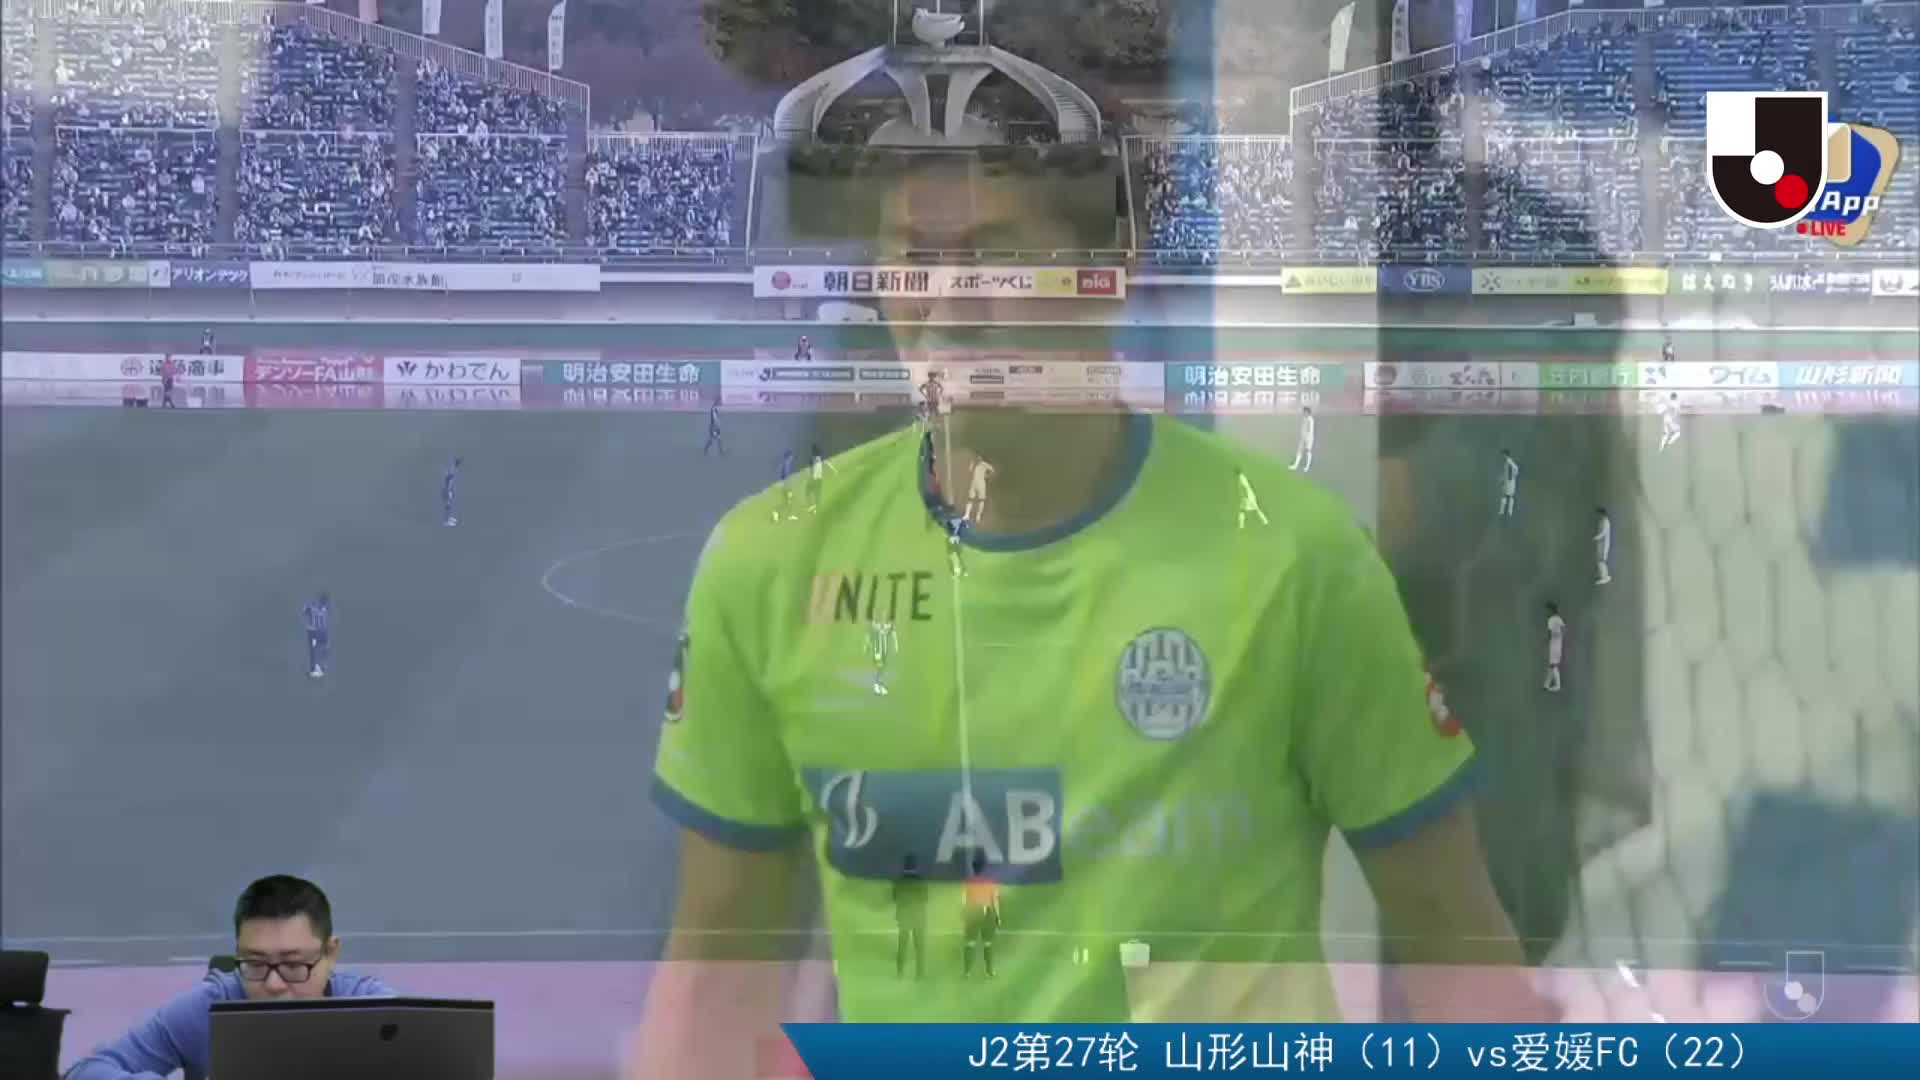 J2联赛：山形山神vs爱媛FC 上半场